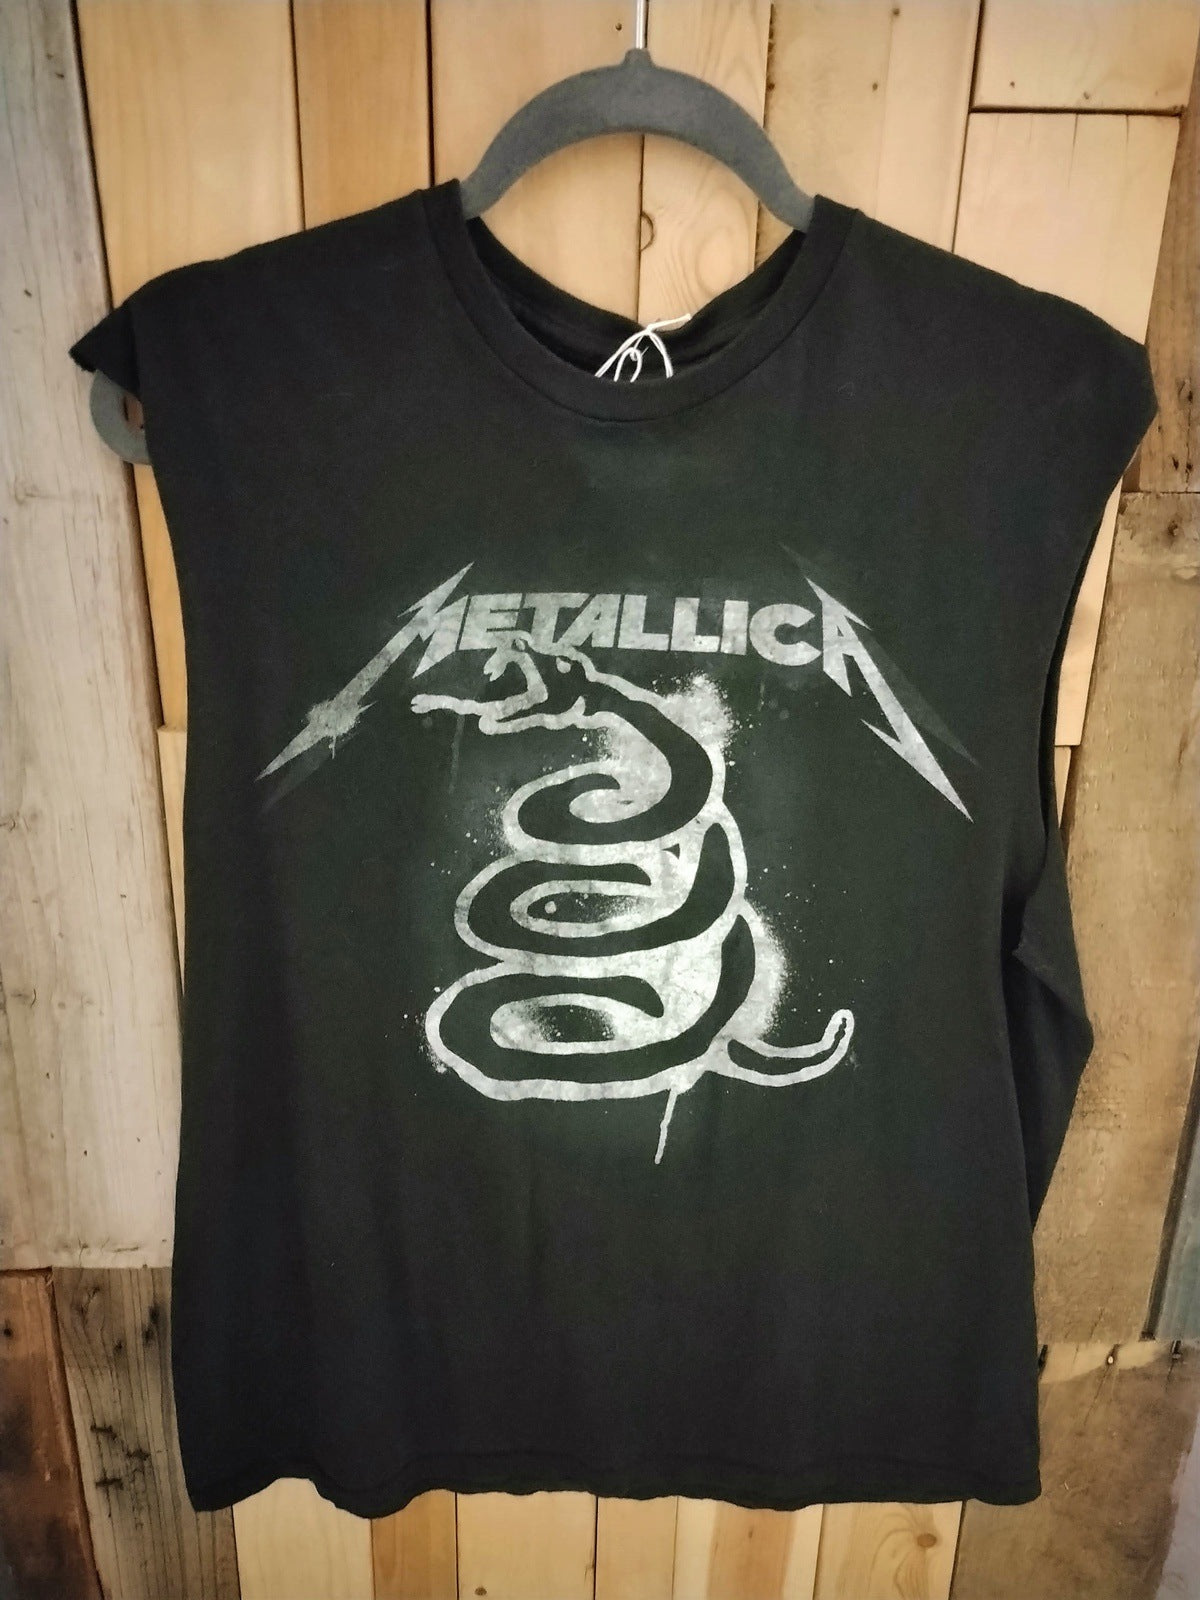 Metallica Official Merchandise "Black Album Logo" Sleeveless T Shirt Size L